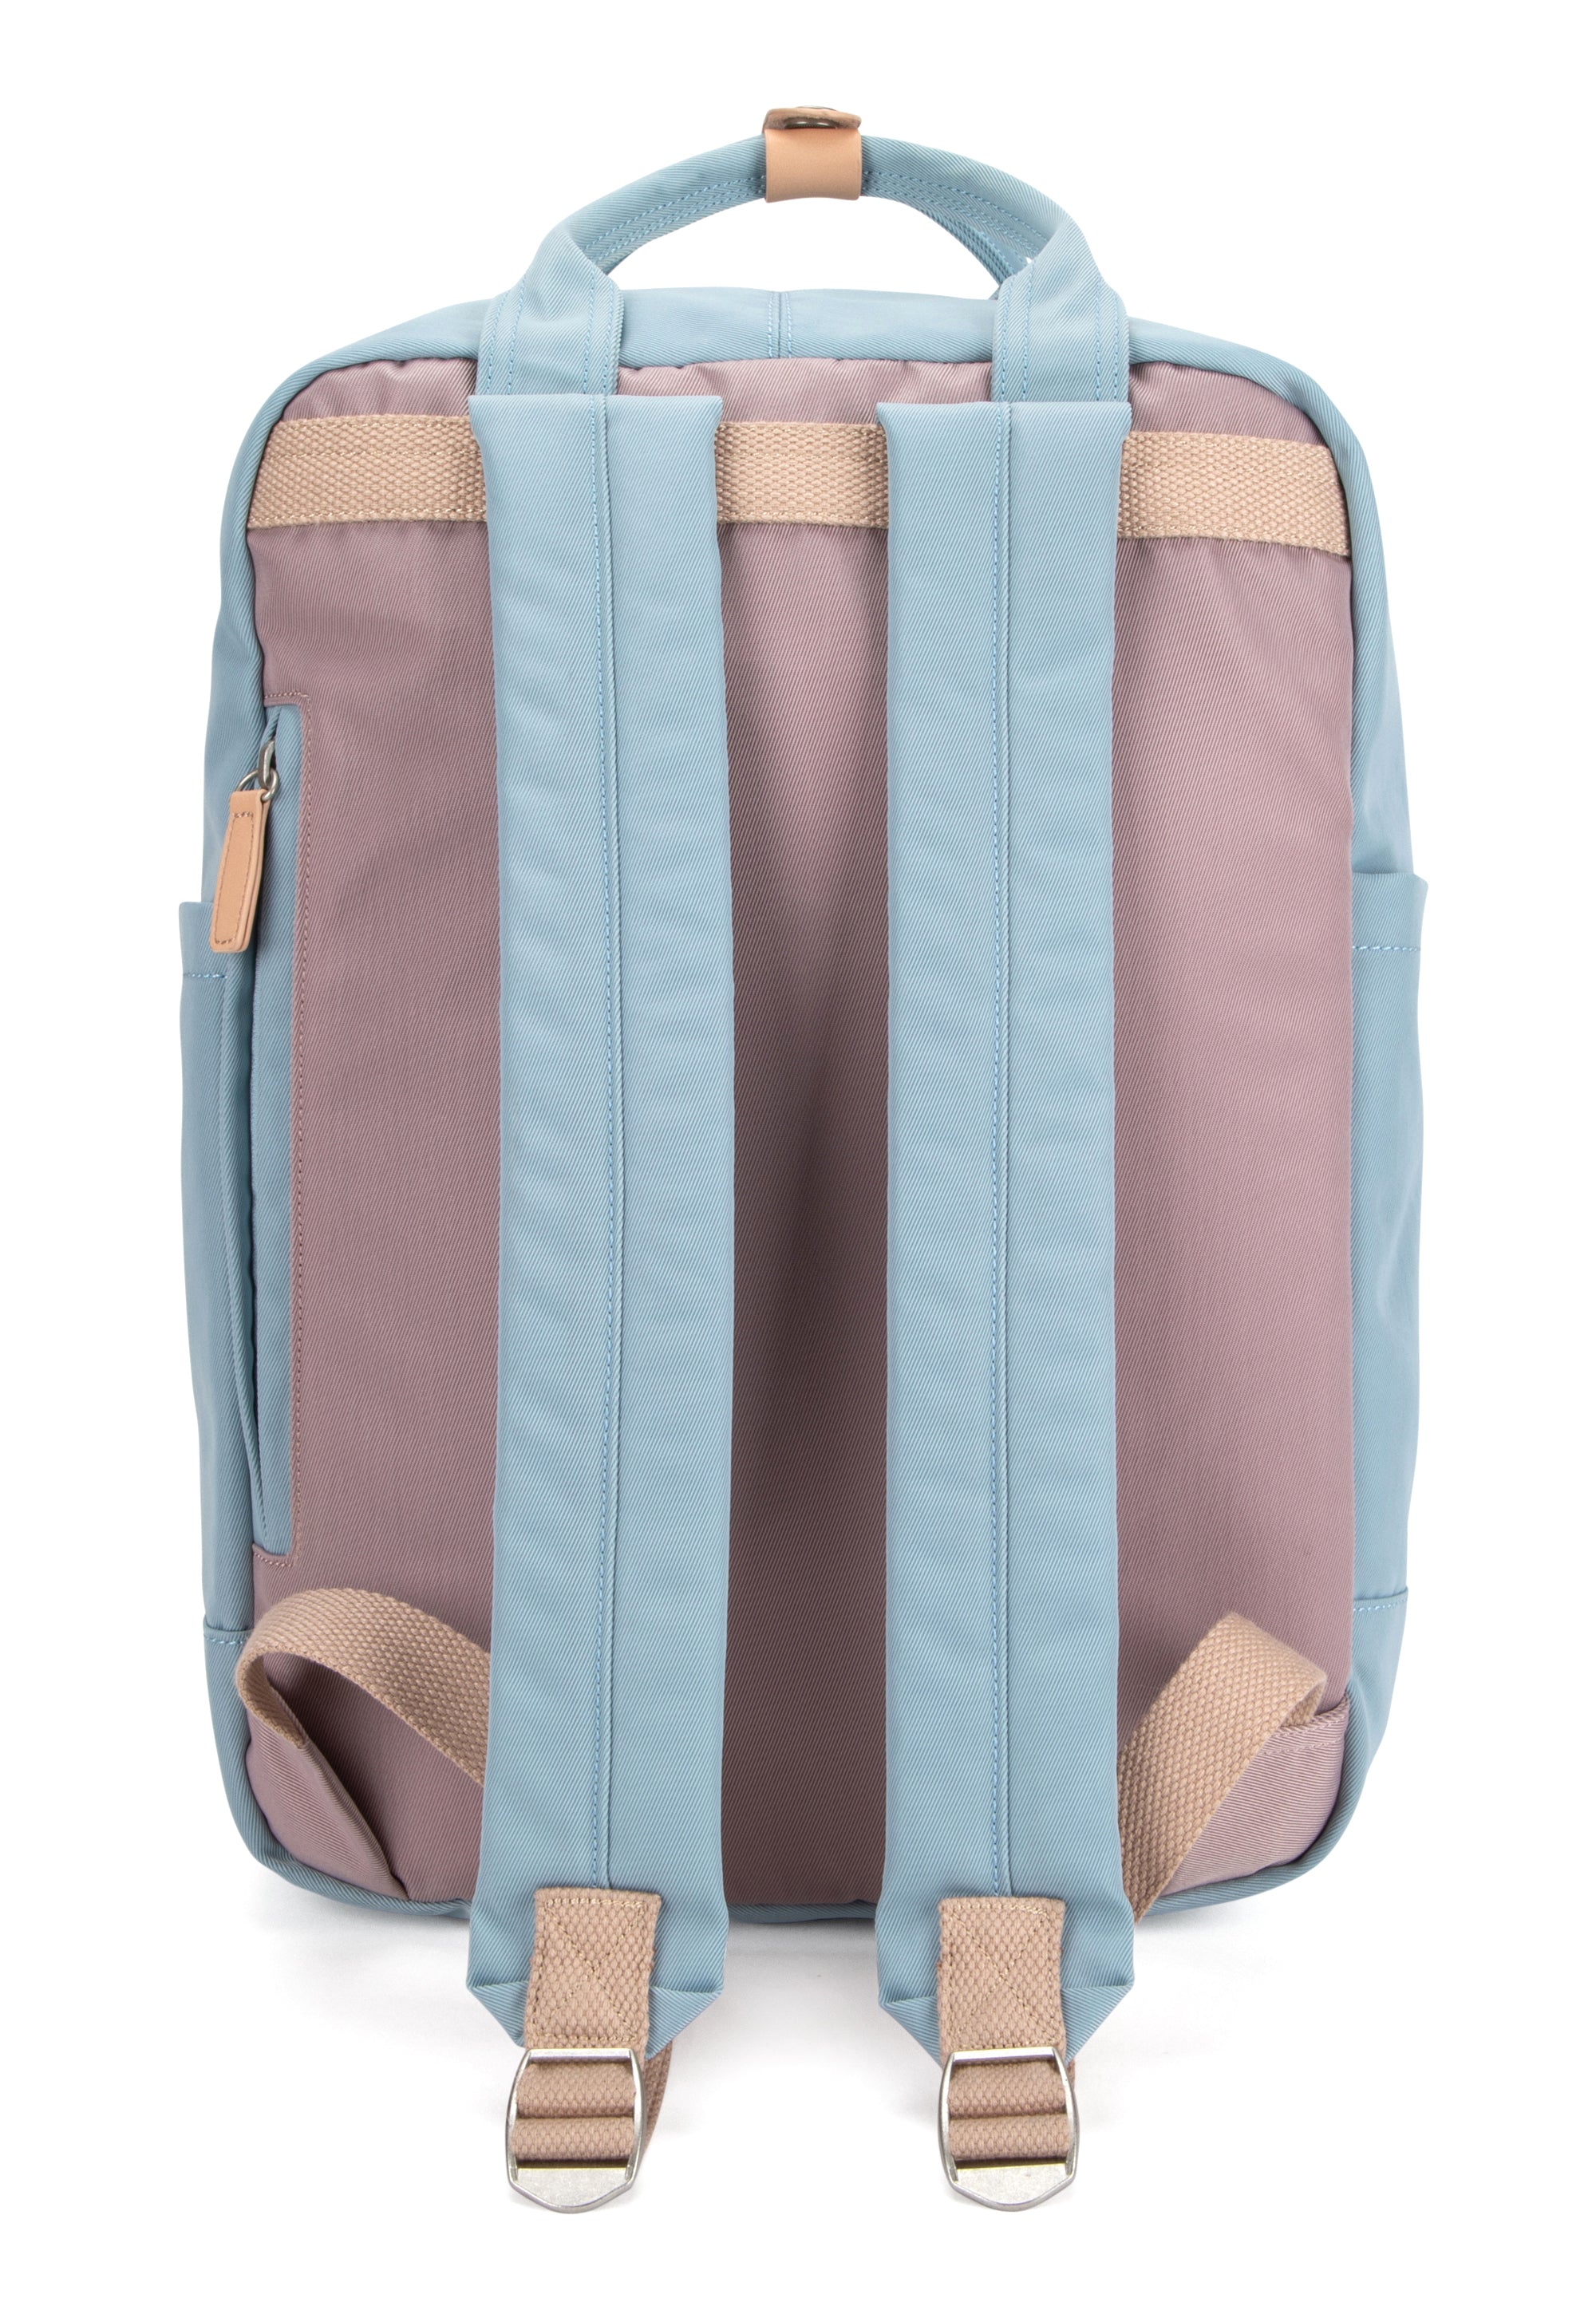 Wimbledon Backpack - Light Blue with Lilac - Seventeen London